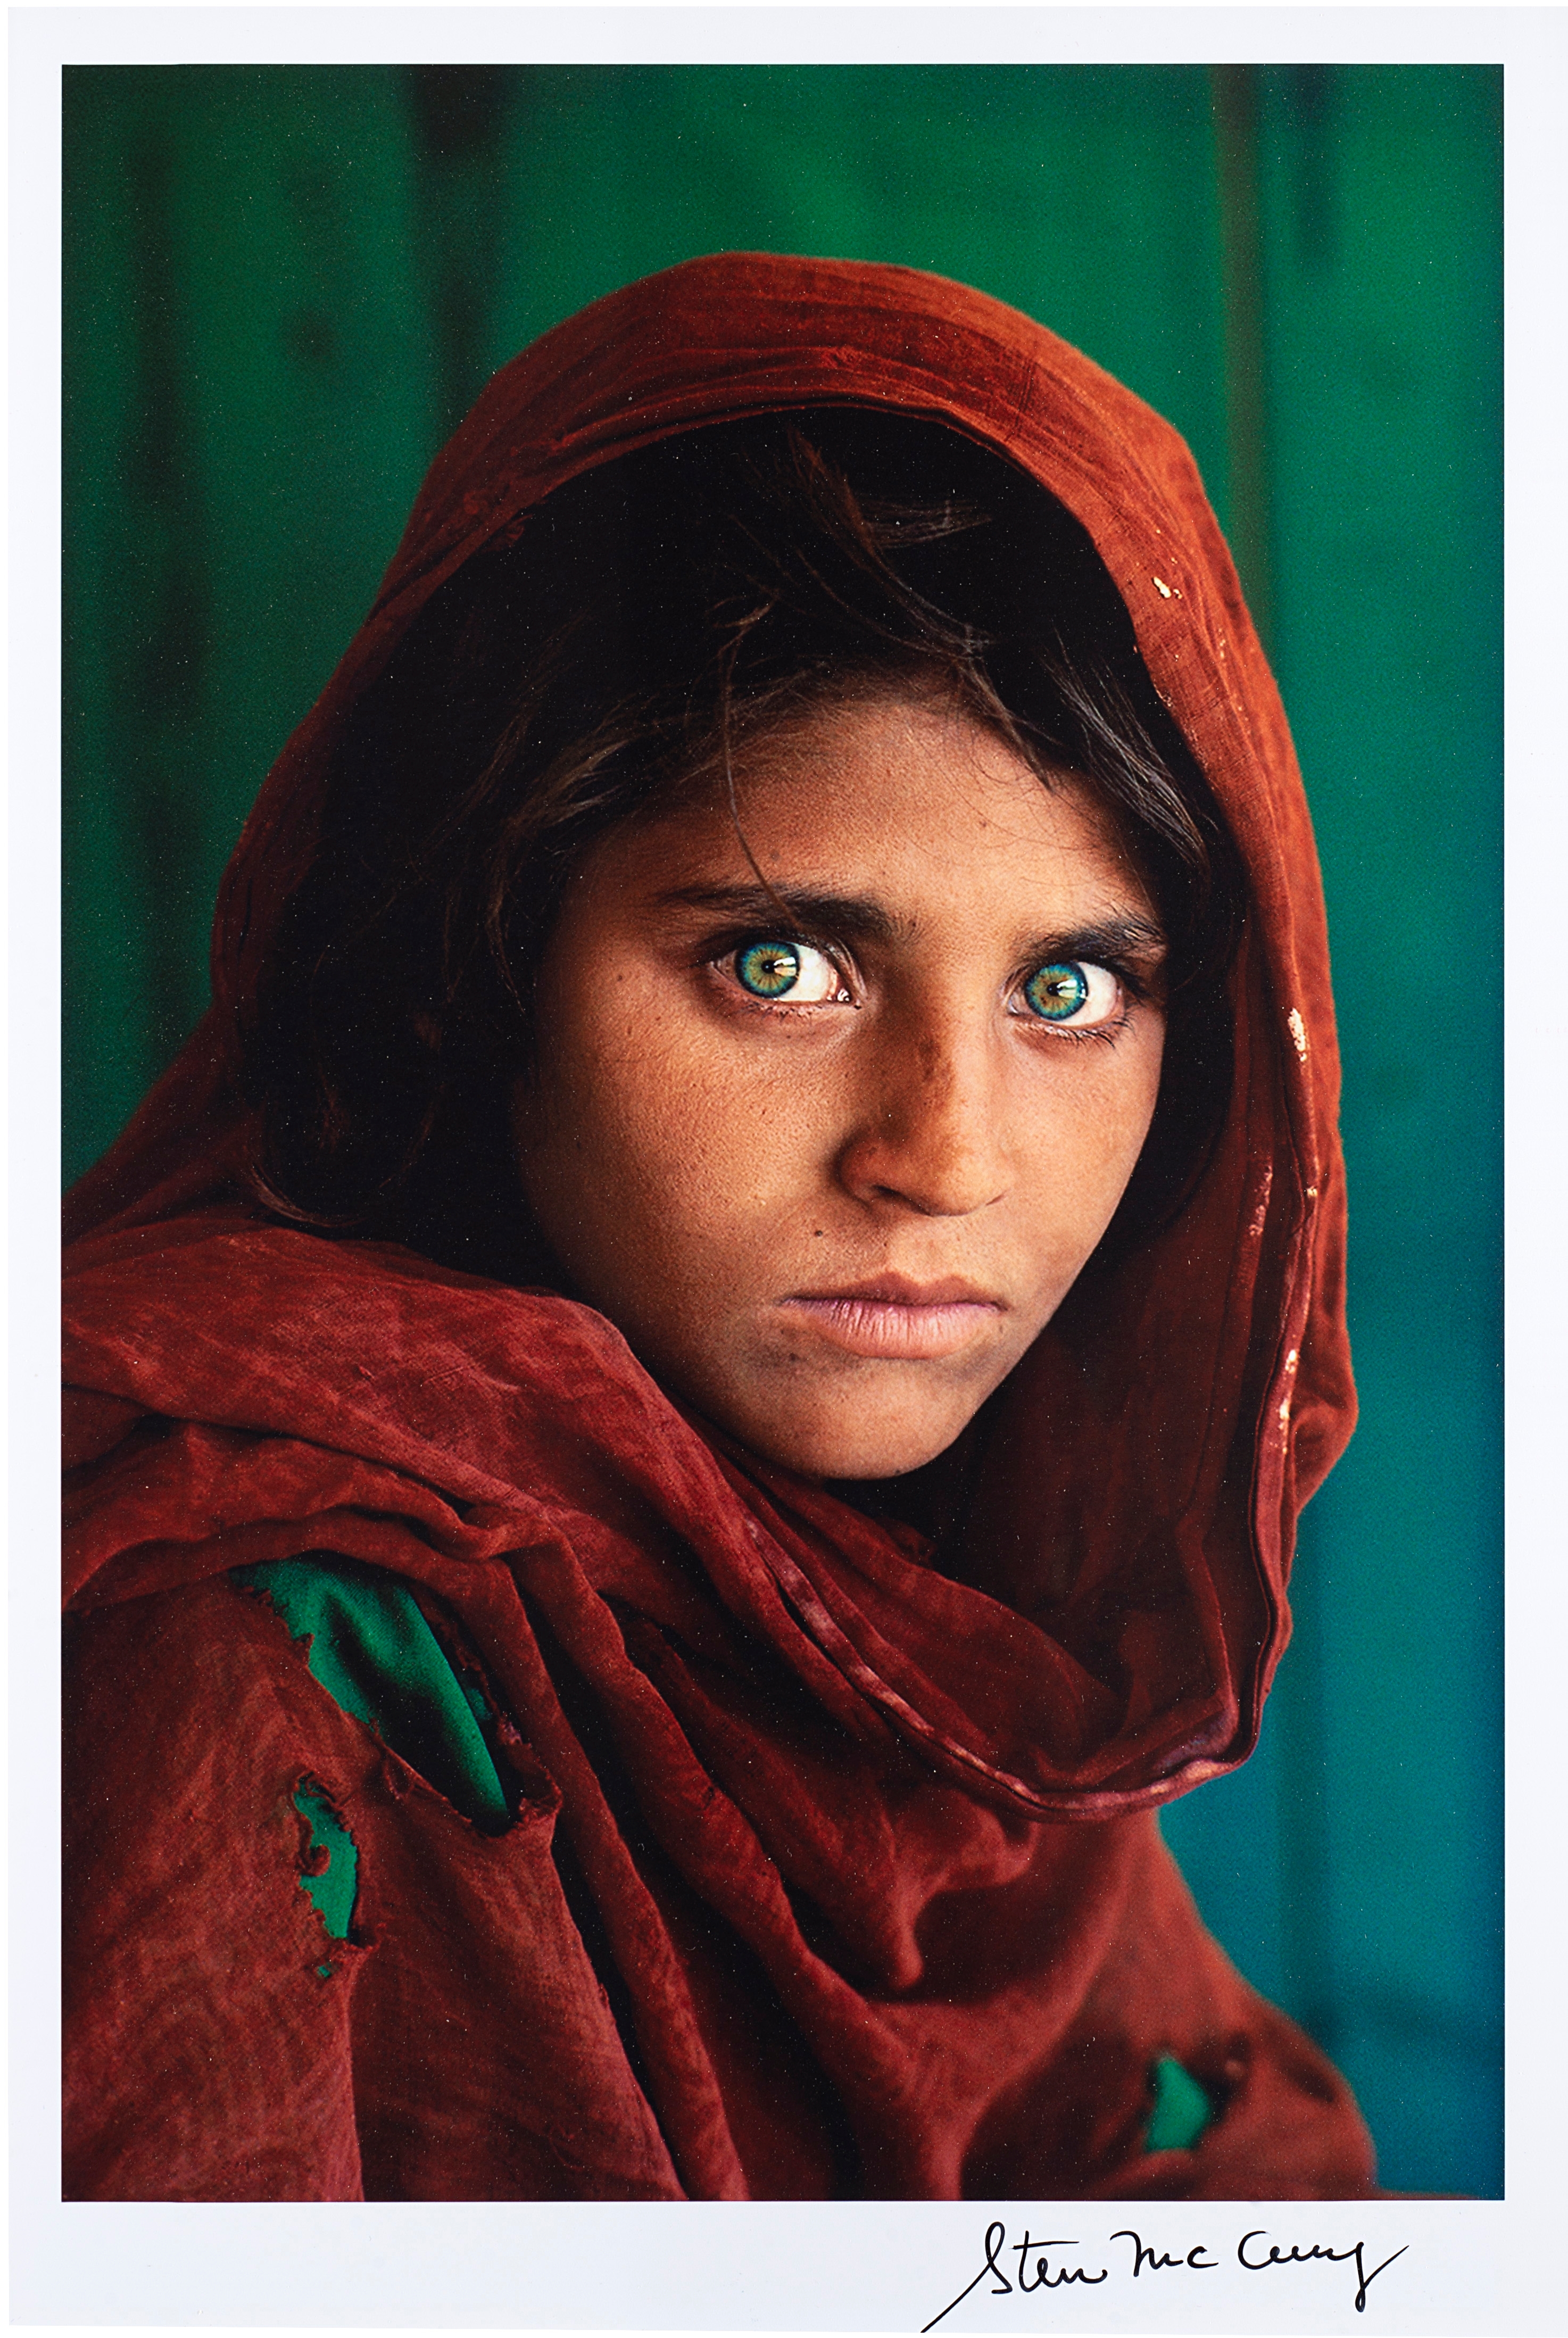 Afghan Girl, Sharbat Gula, Peshawar, Pakistan by Steve McCurry, 1984, printed later